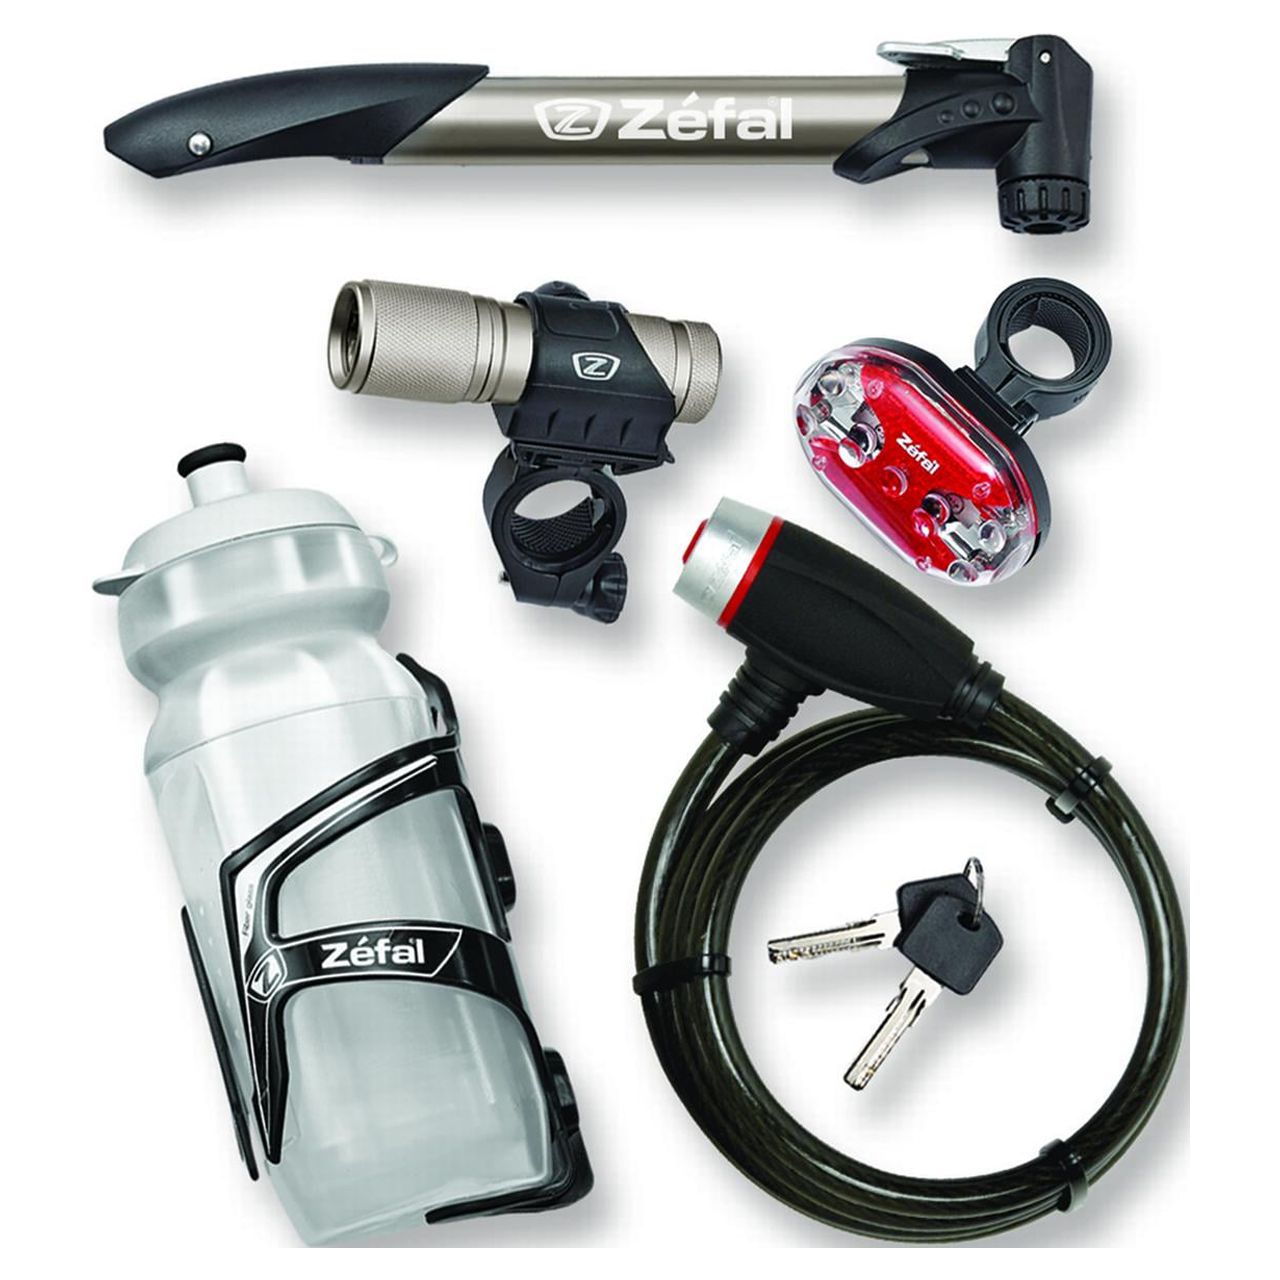 Zefal 6-Piece Bike Accessories Starter Pack 2.0 (Mini Hand Pump, Lock, Light Set, Bottle, Cage) - image 1 of 10